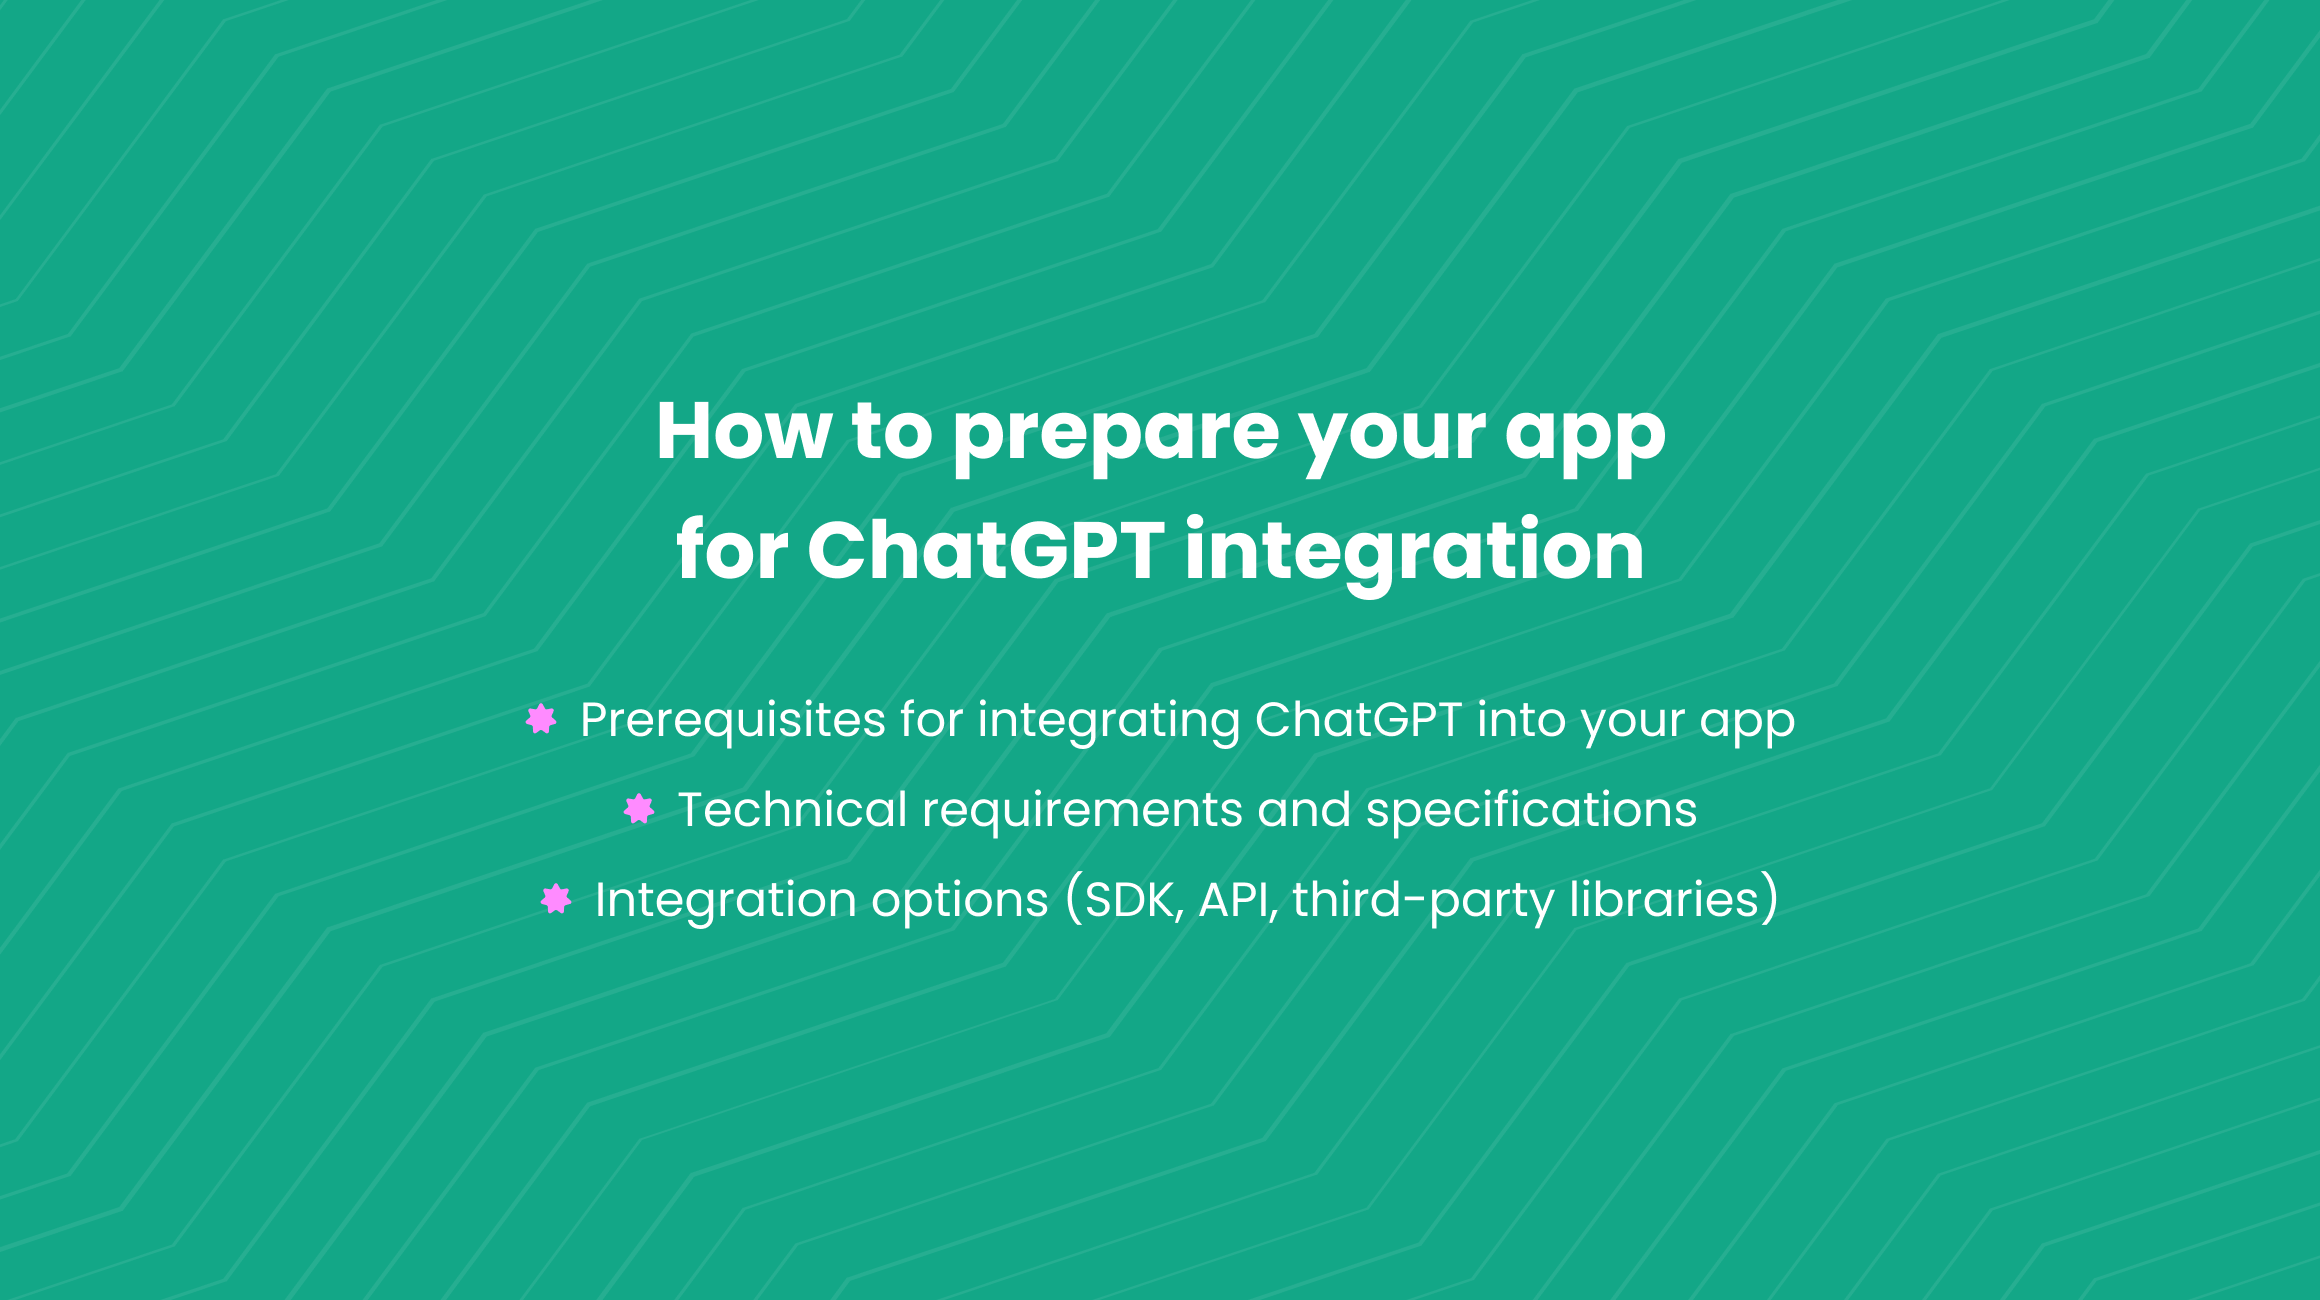 Preparing your app for ChatGPT integration